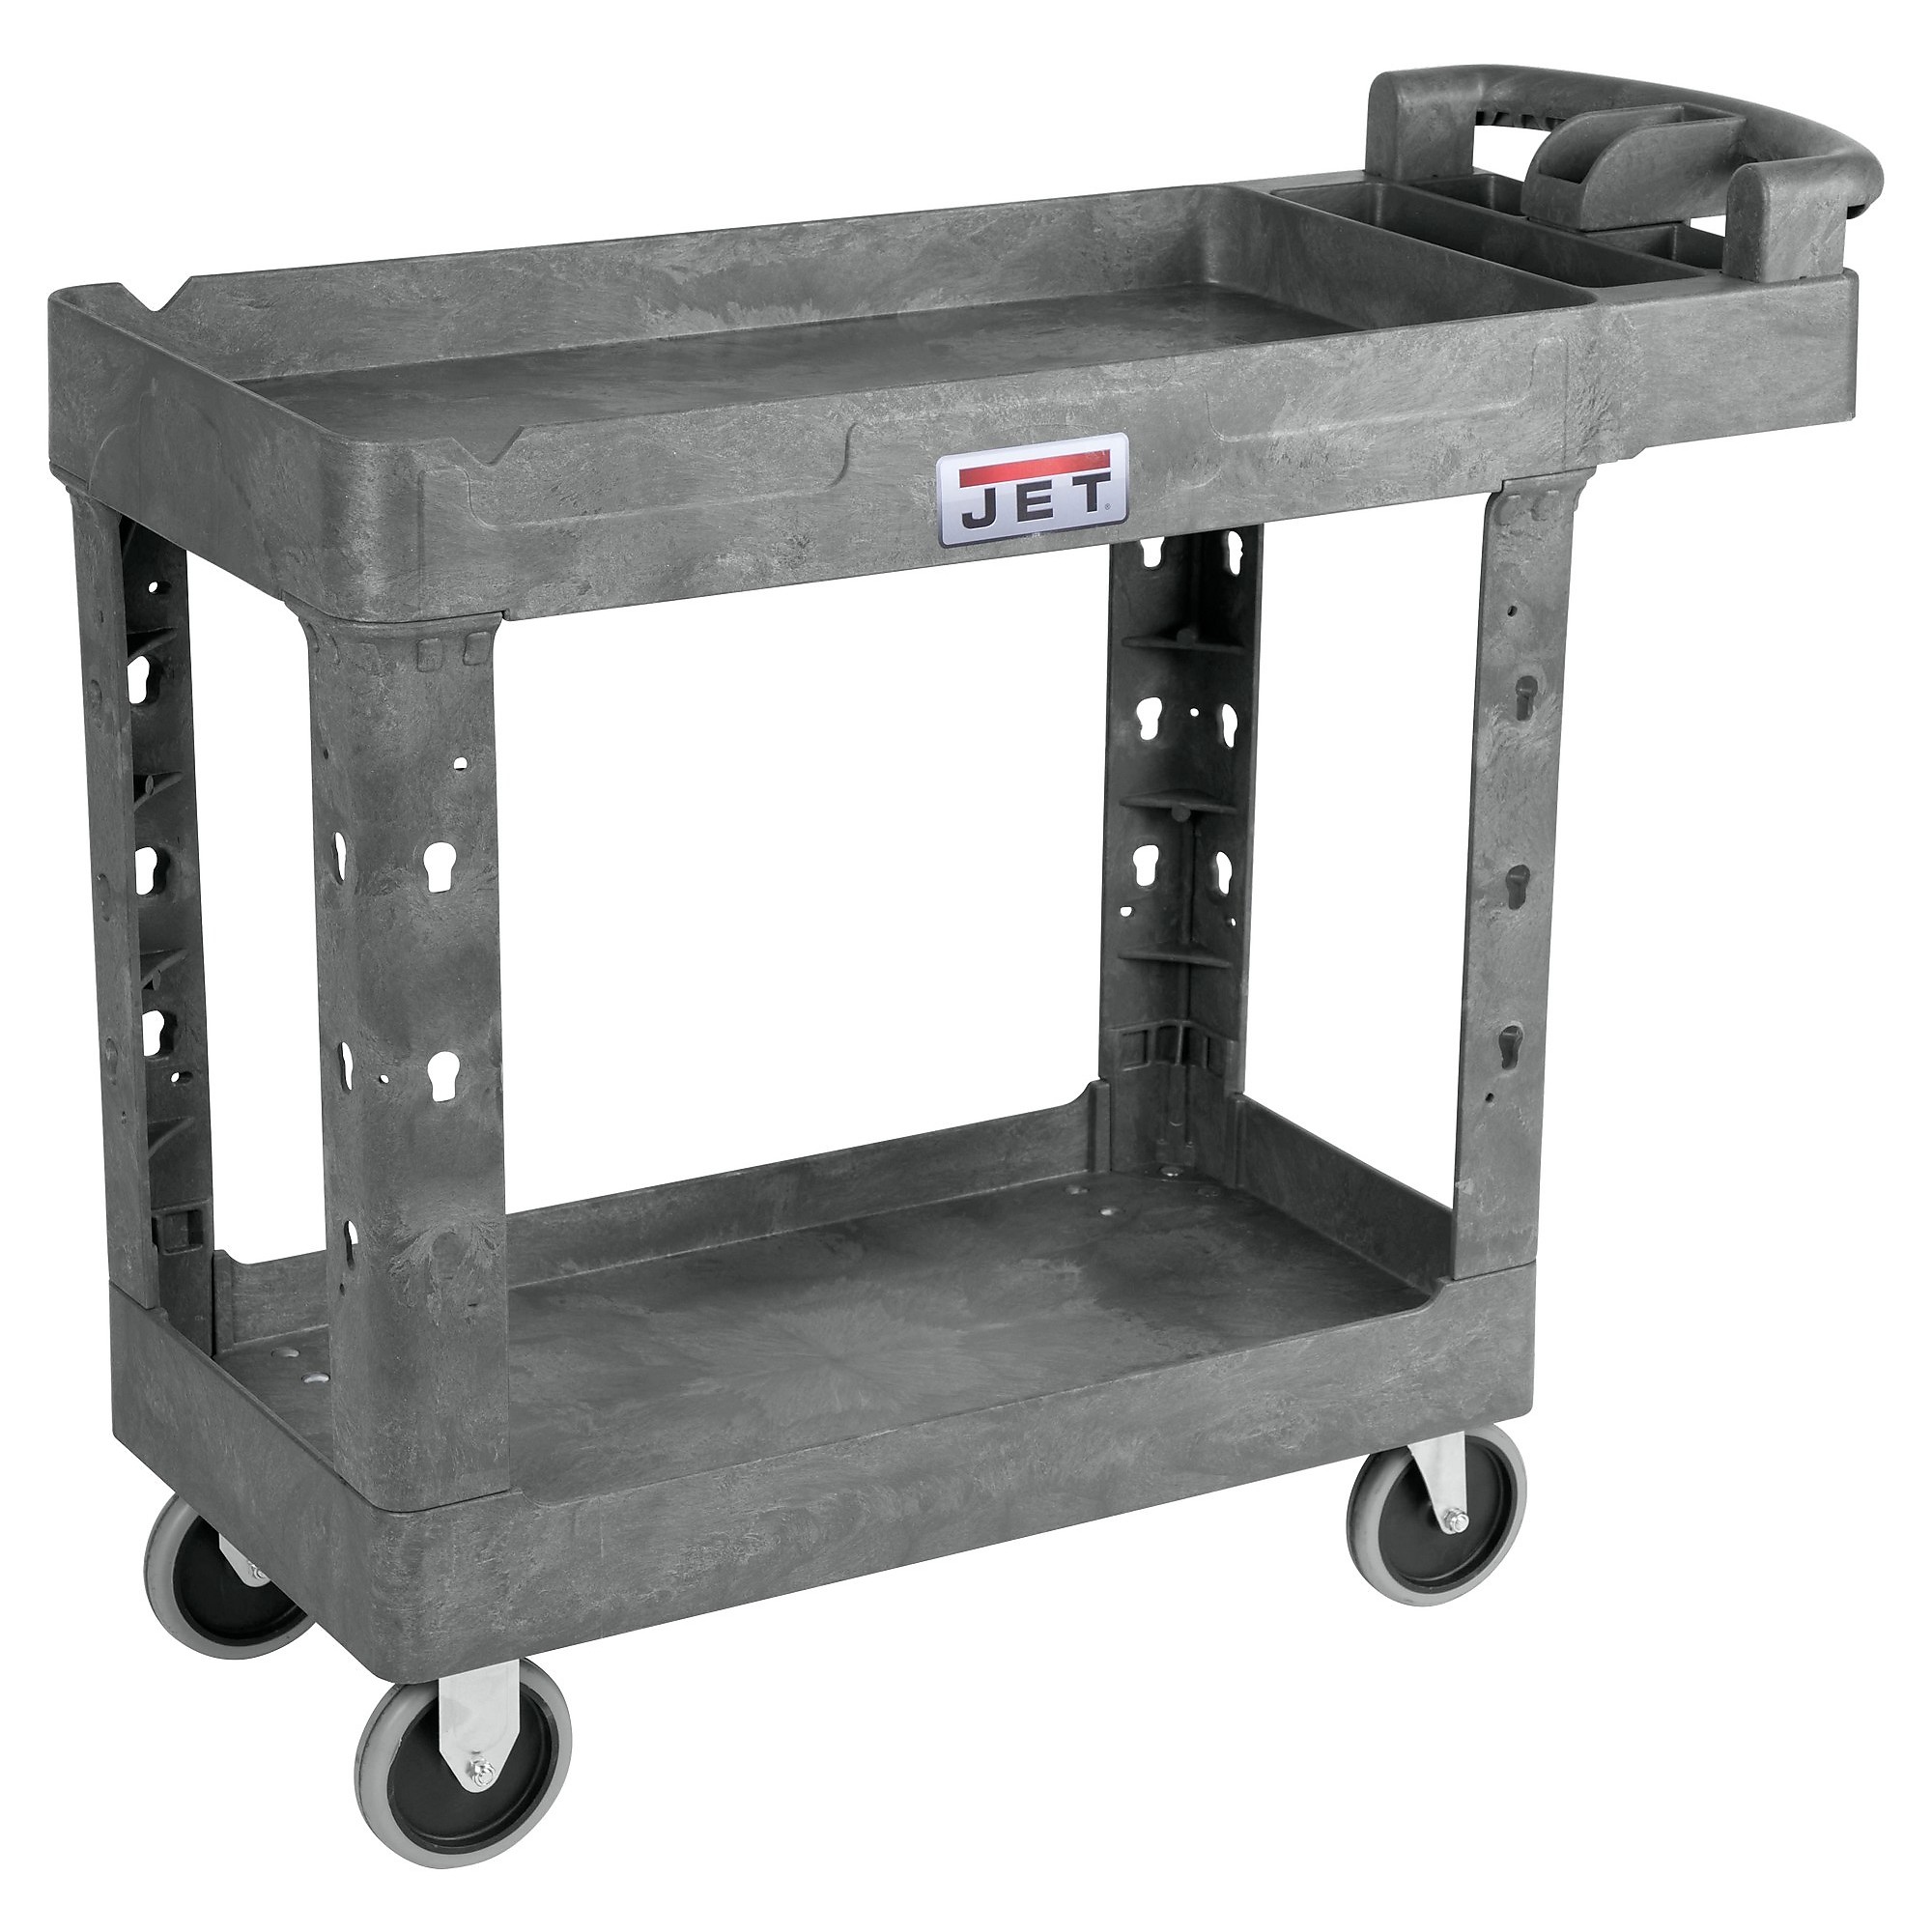 JET, Resin Utility Cart, Total Capacity 1500 lb, Shelves (qty.) 2 Material Resin, Model 141012